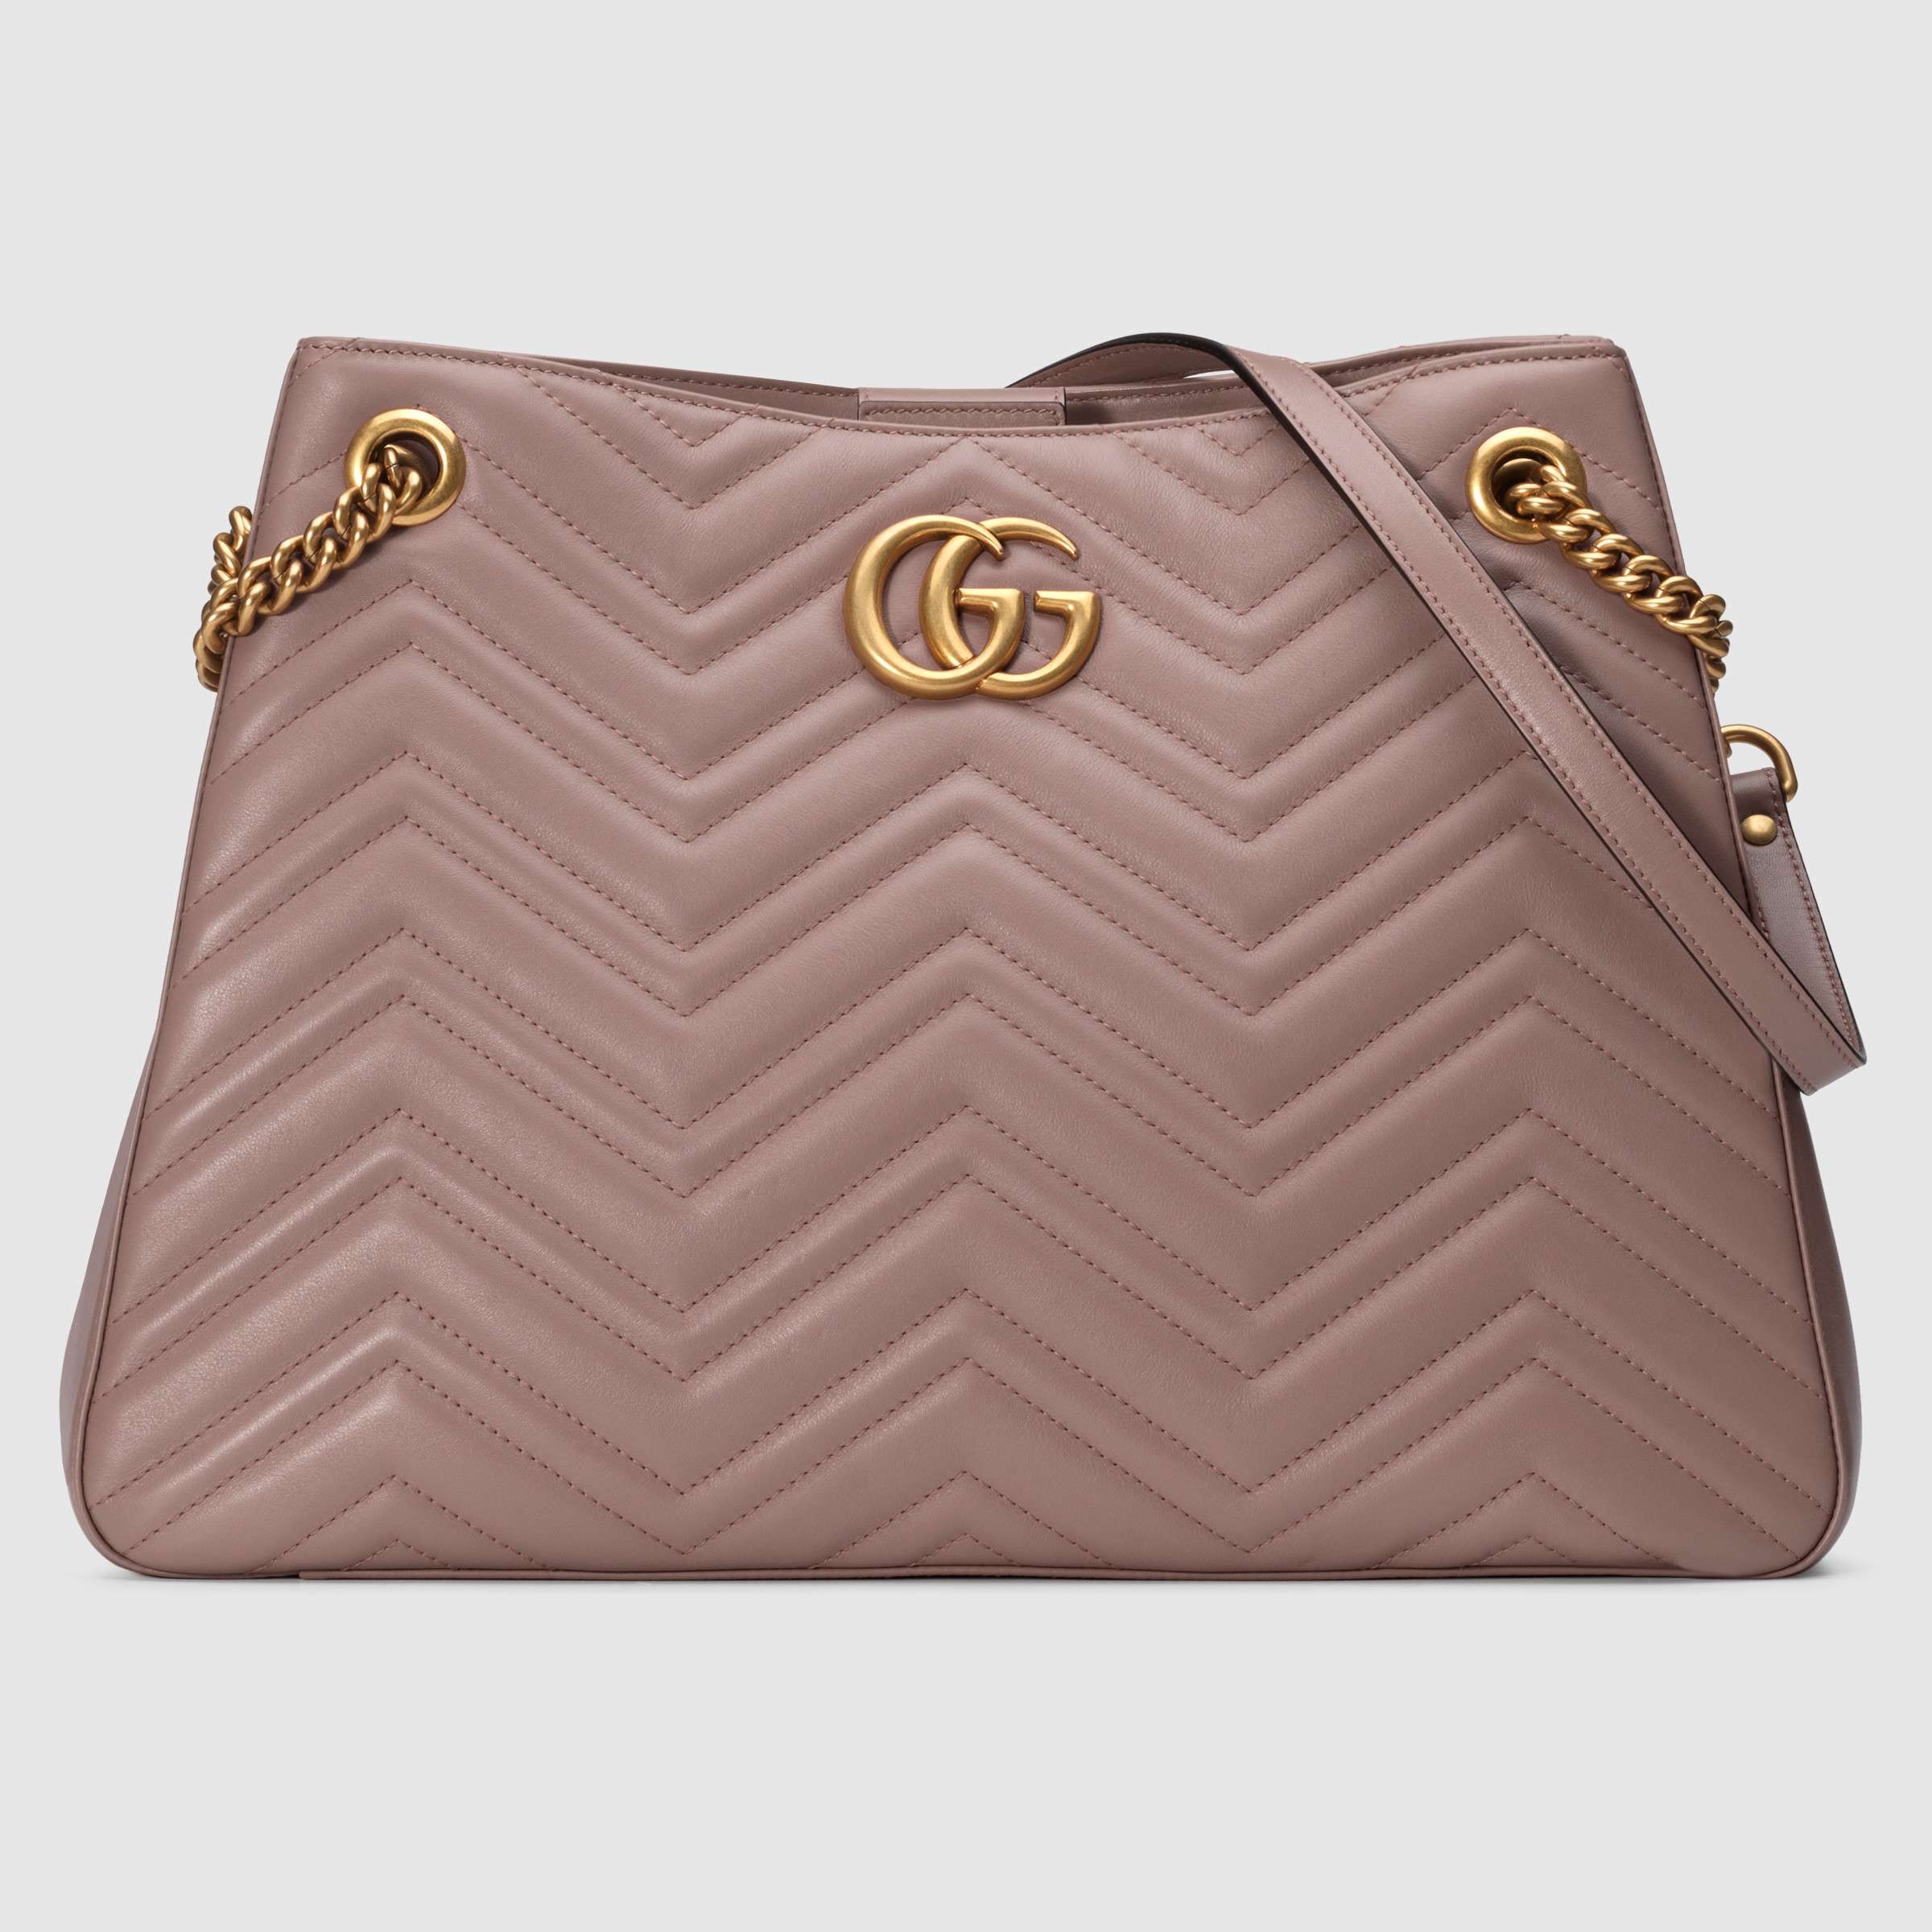 Replica Gucci Nude GG Marmont Medium Shopping Bag